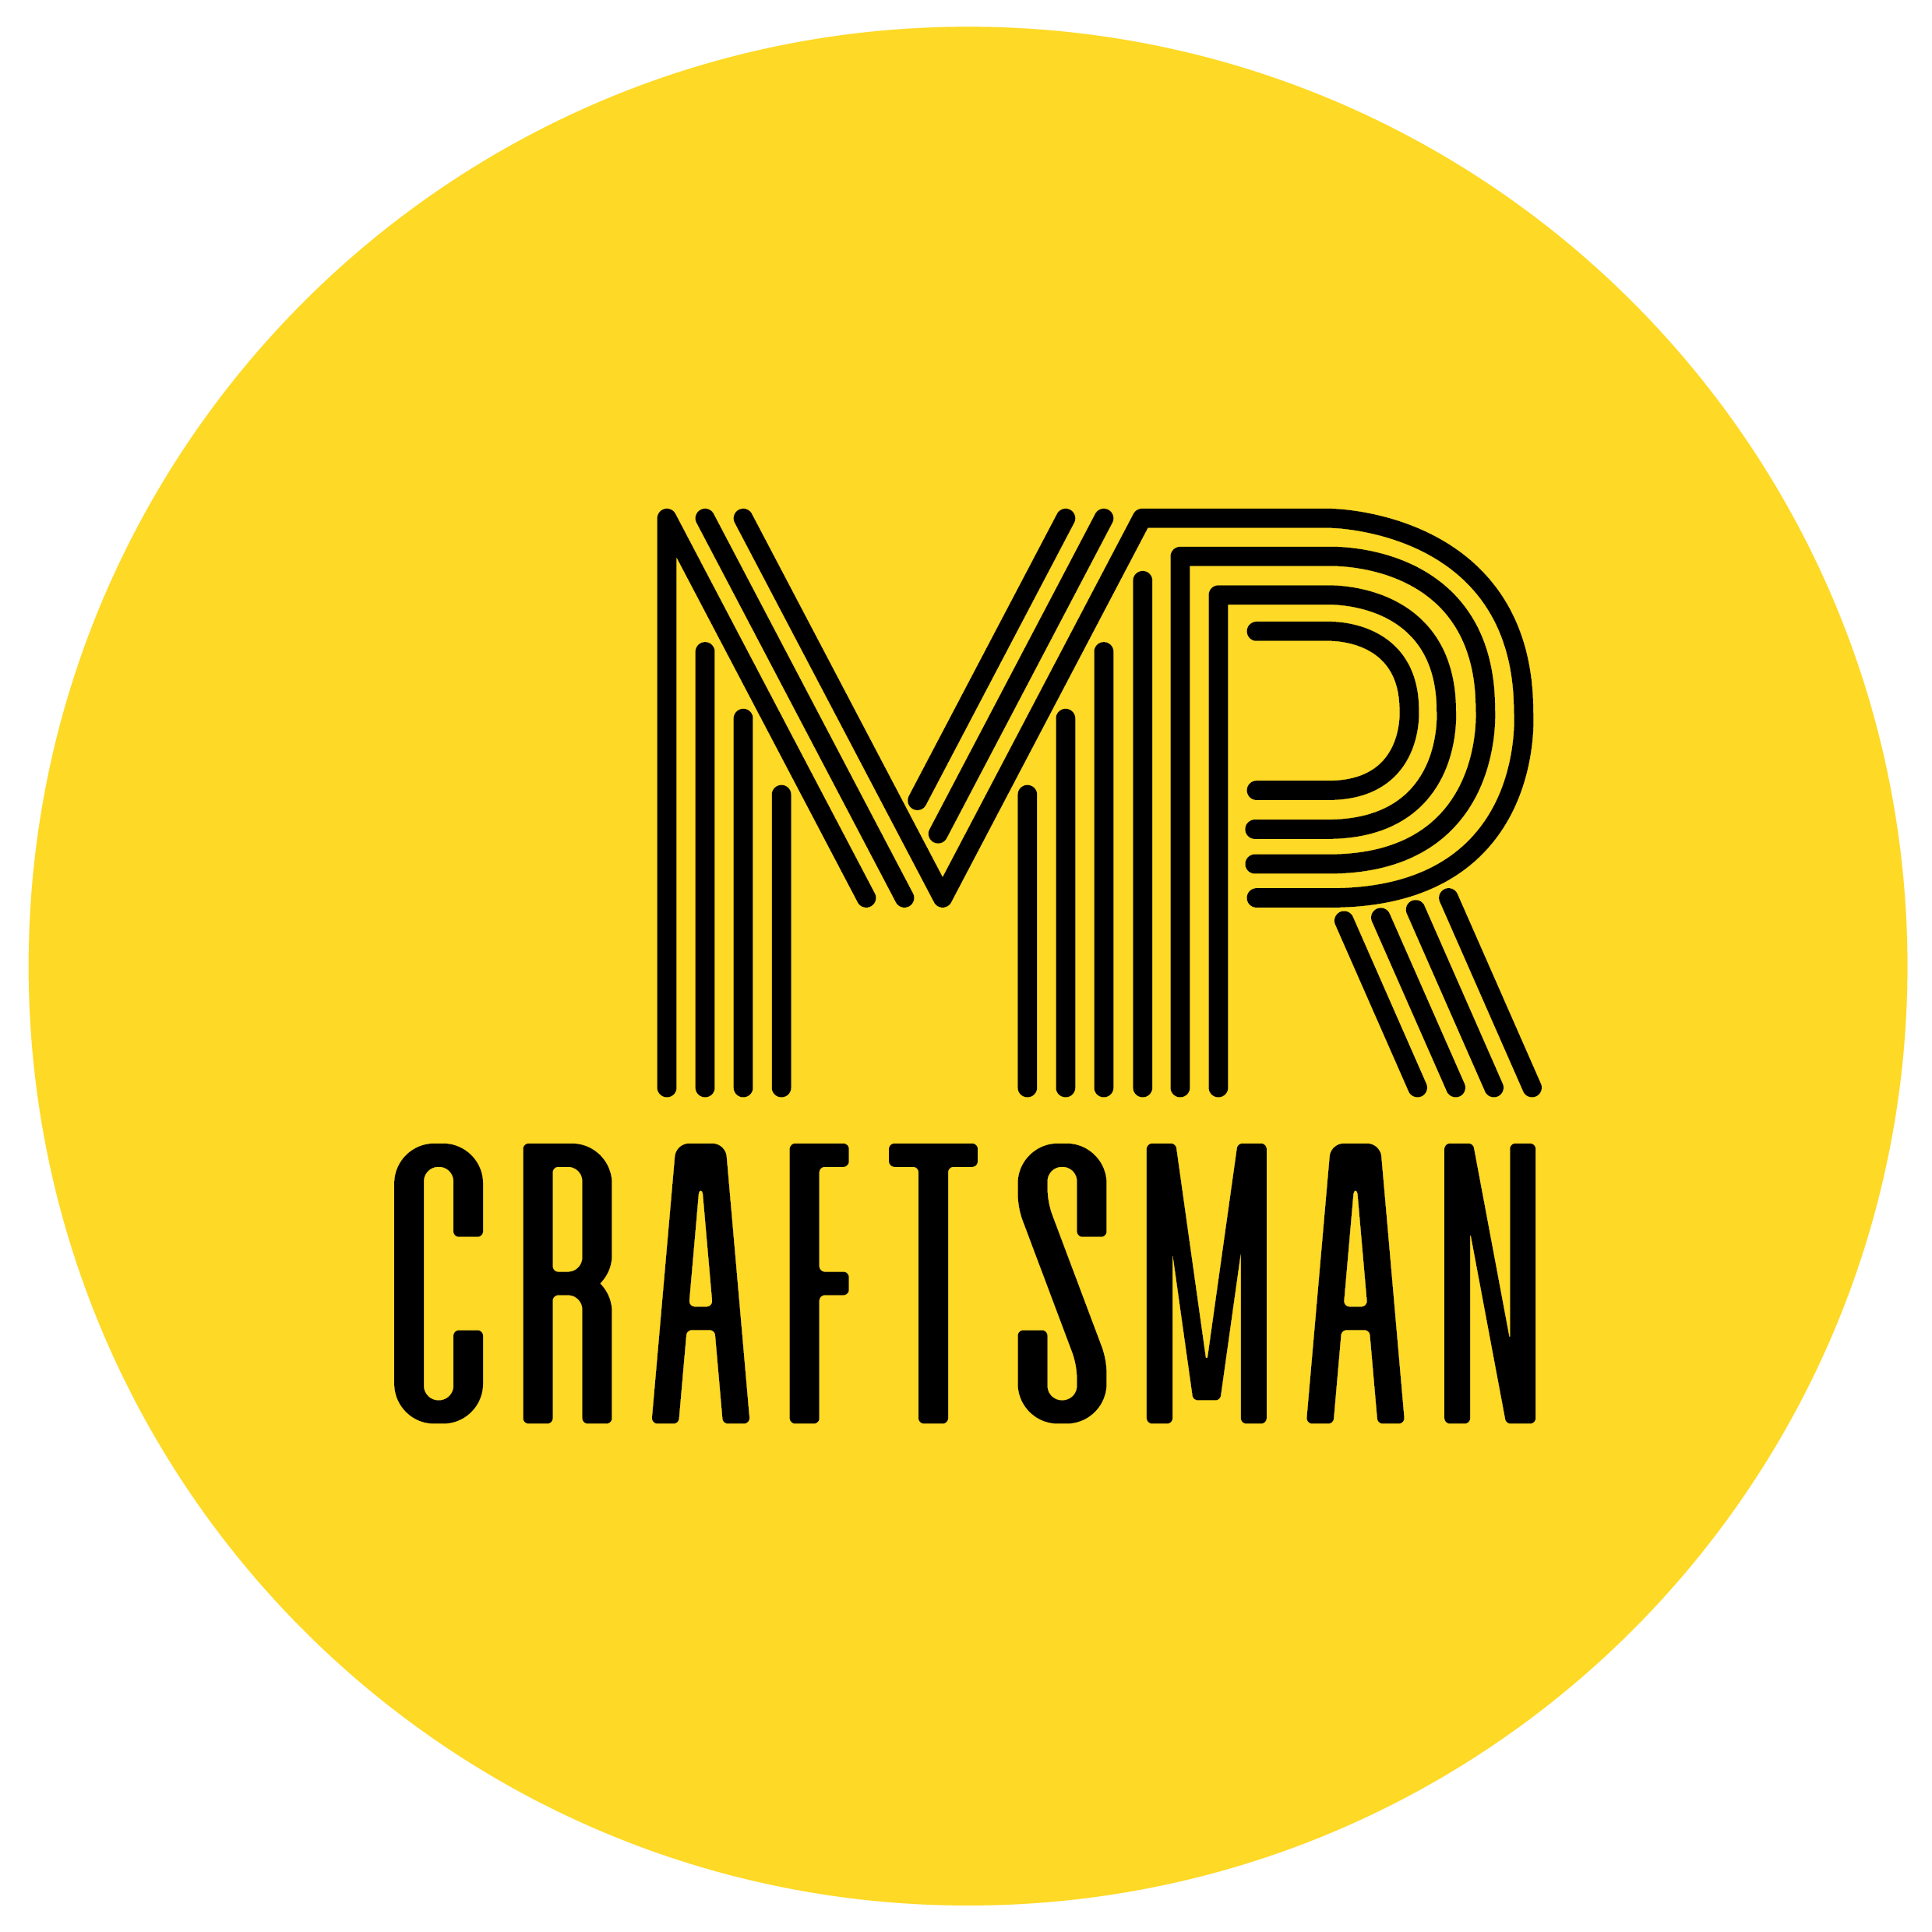 Mini Breakfast Croissants — MR CRAFTSMAN